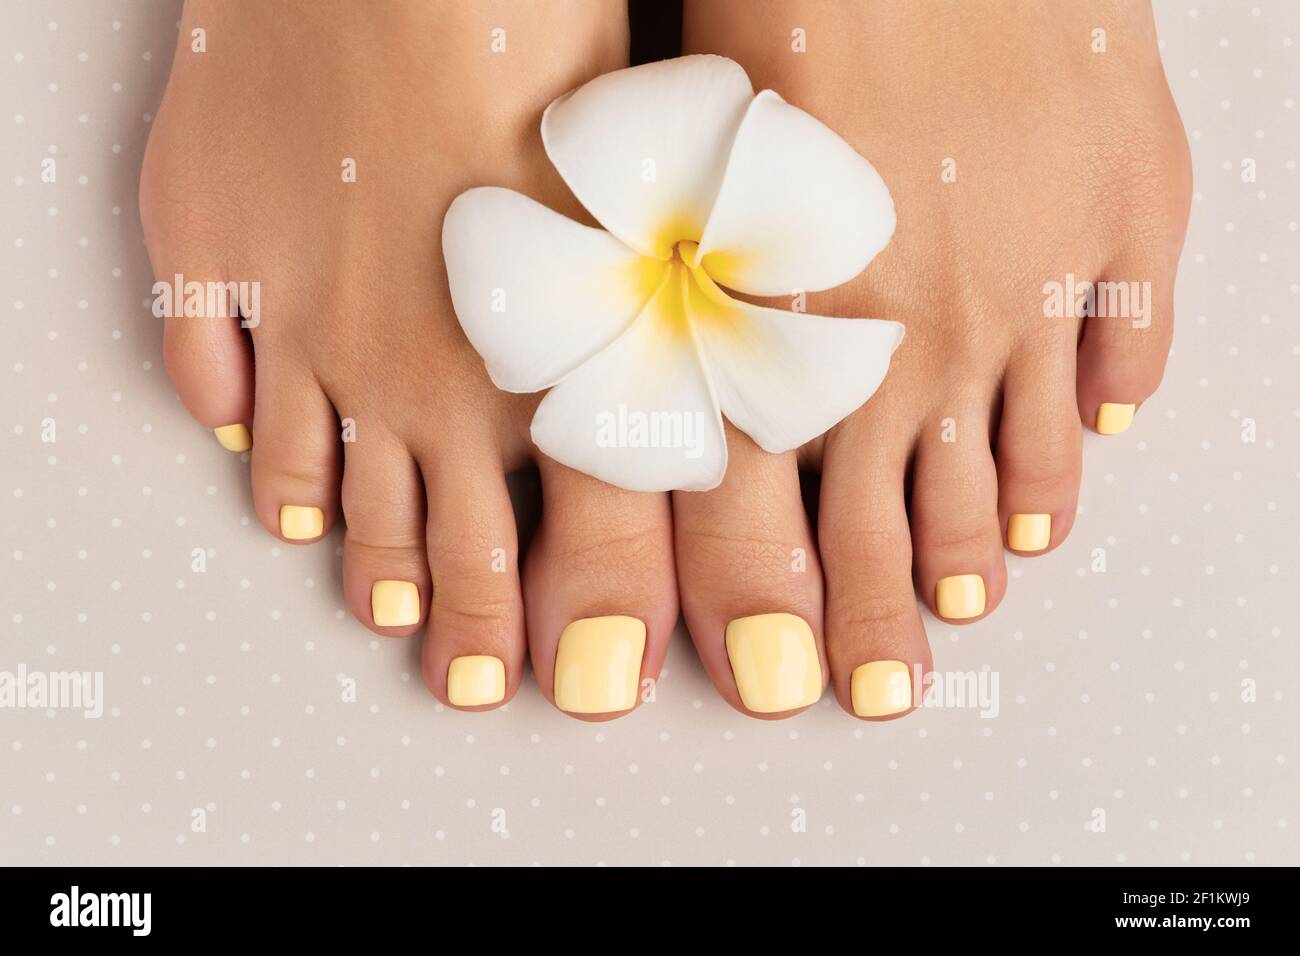 California Beach Fun | Summer toe nails, Toe nails, Toe nail designs